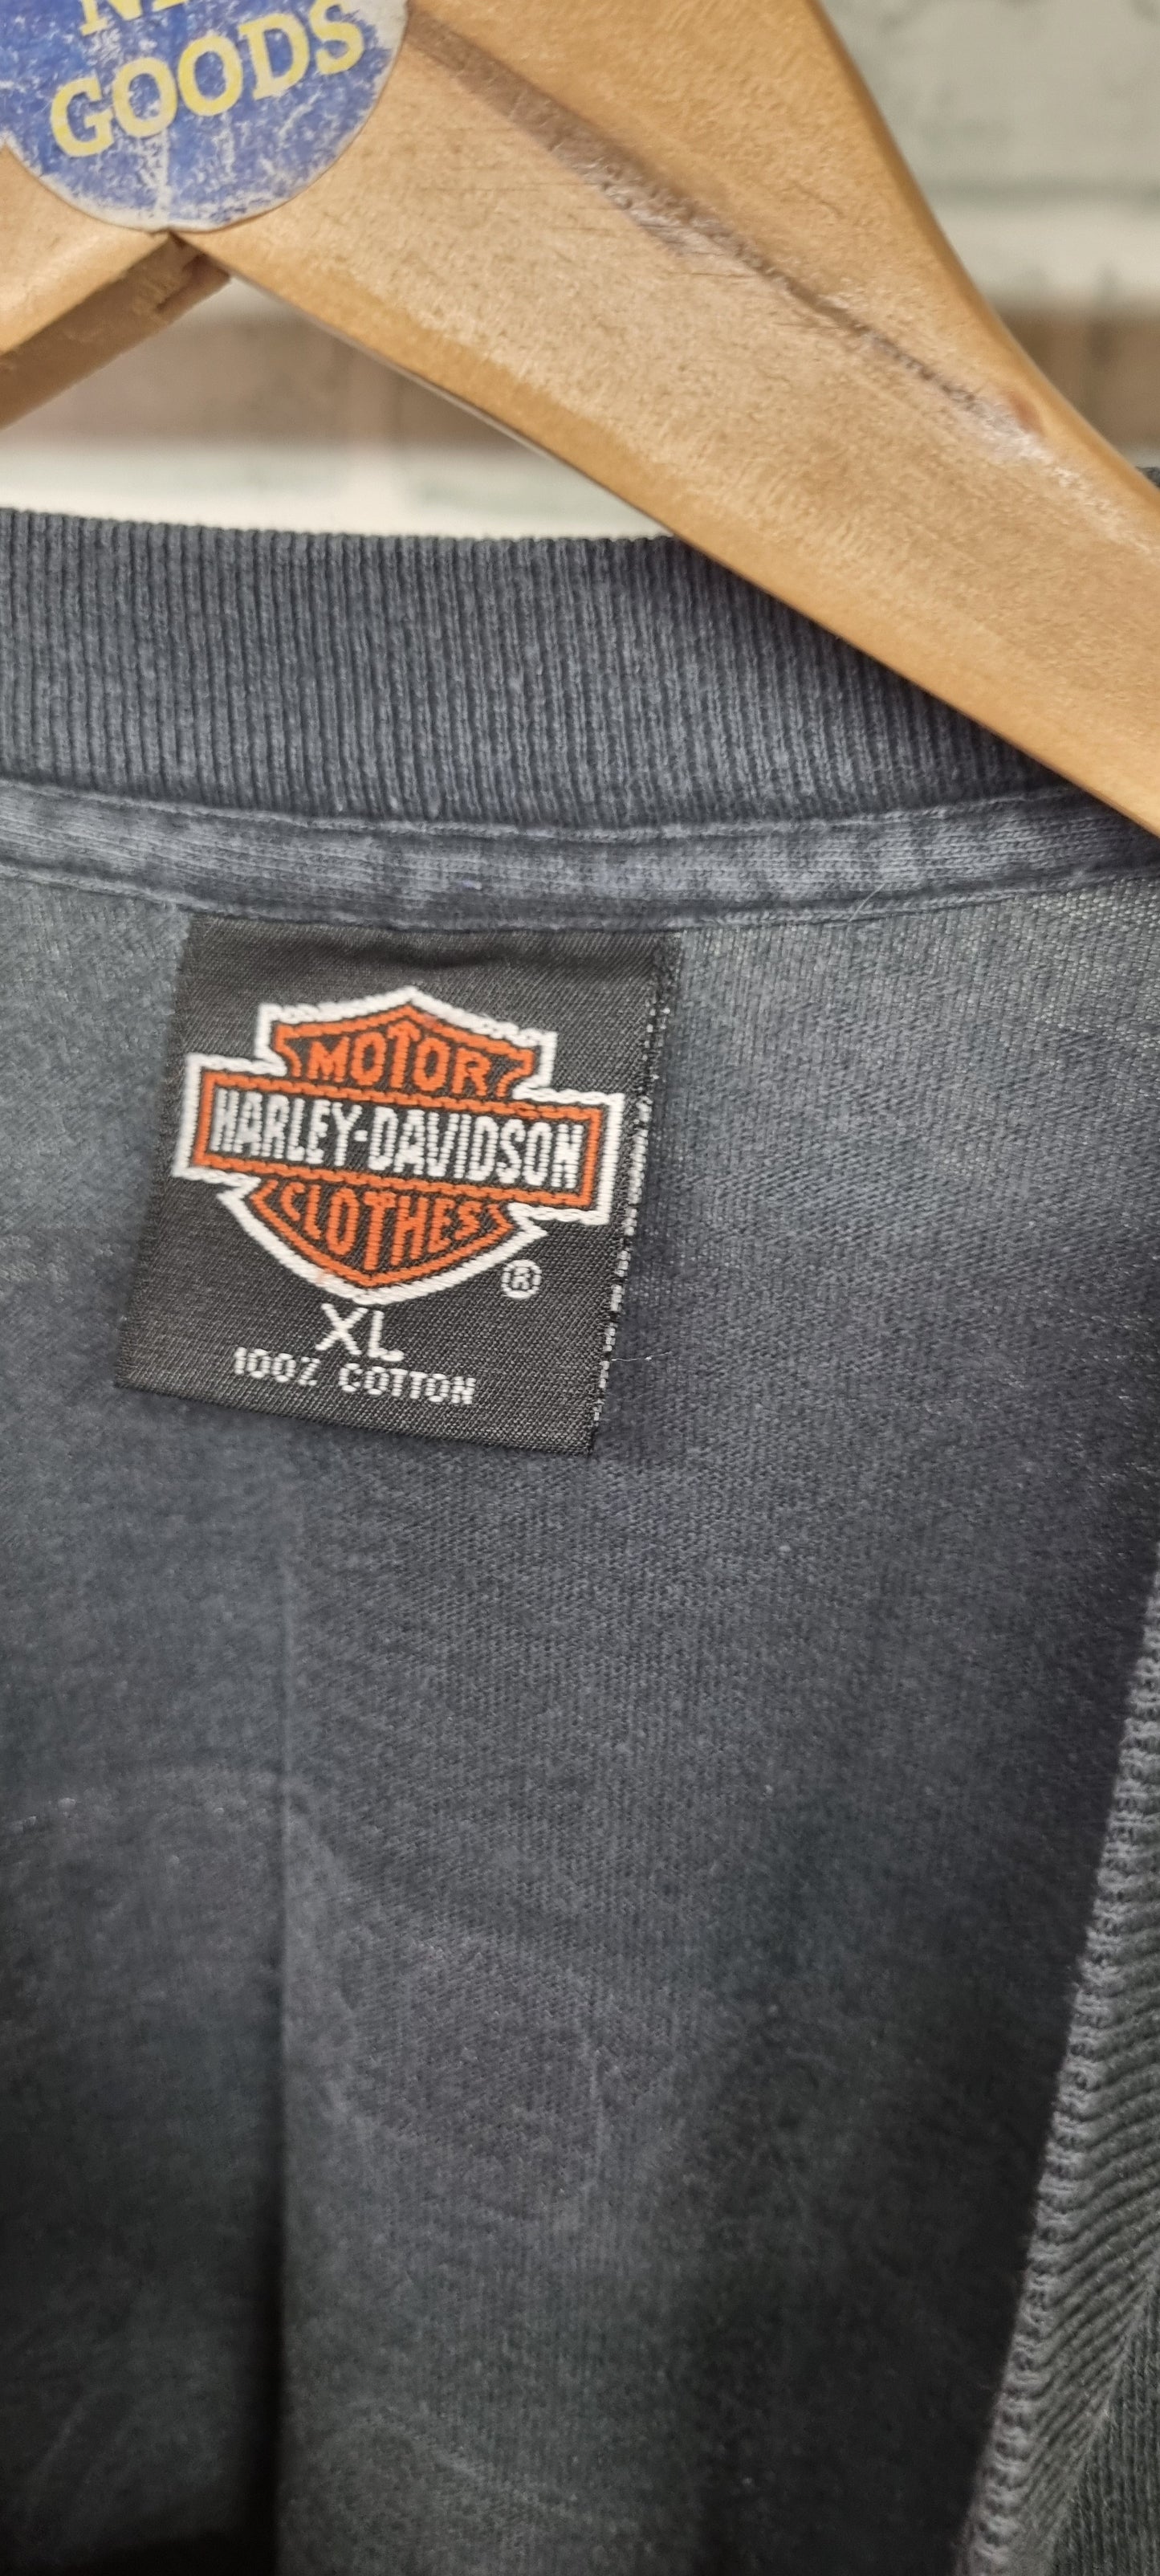 Harley Davidson Dudley Perkins Co. San Francisco Size XL